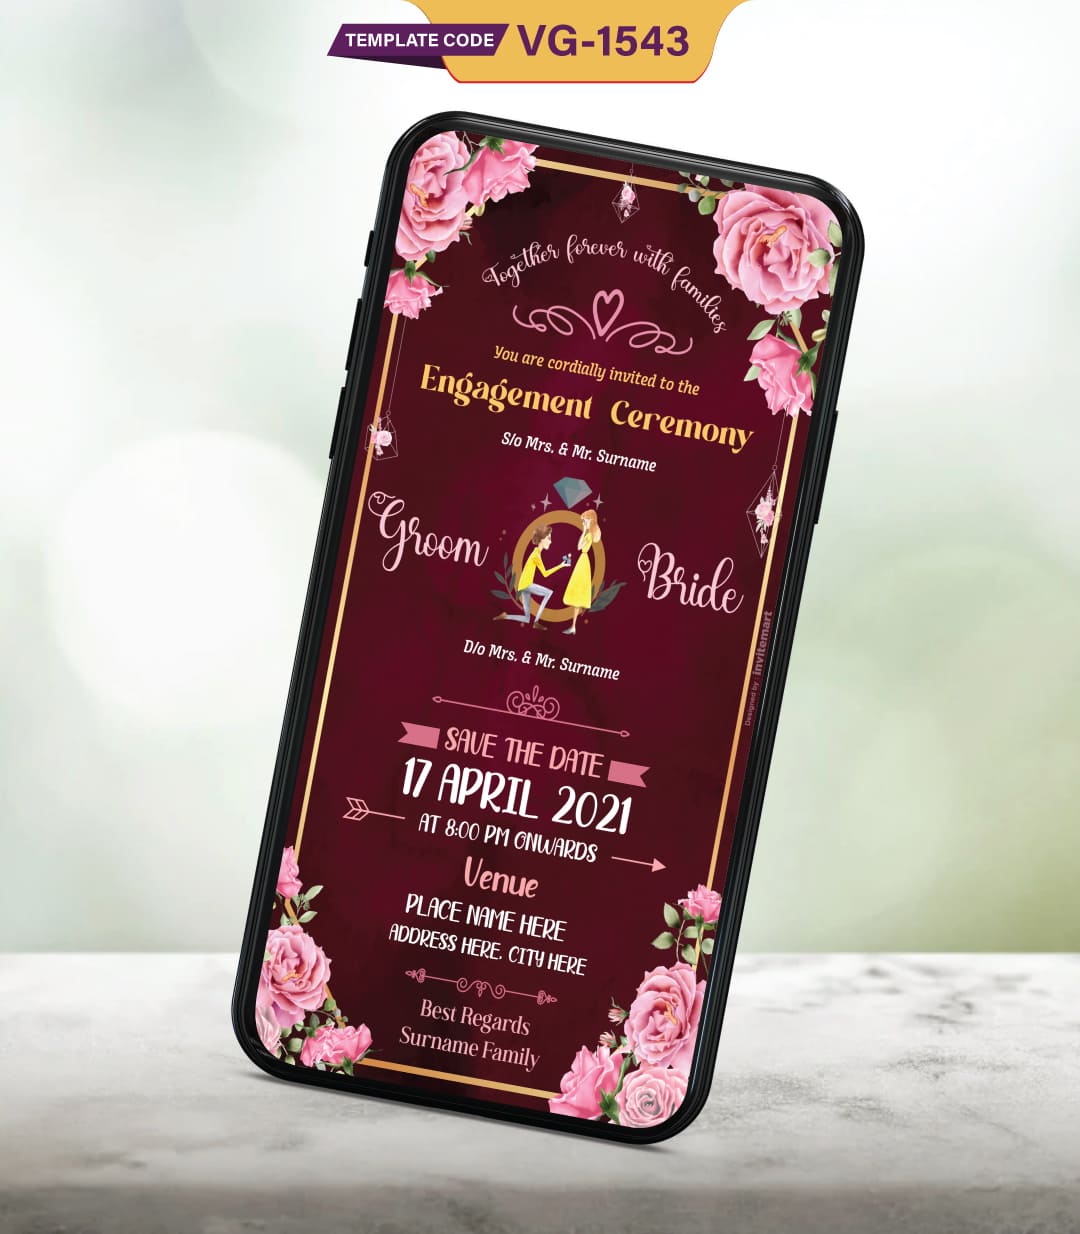 Dark Wedding Invitation Card Template in PSD by janurmas on DeviantArt